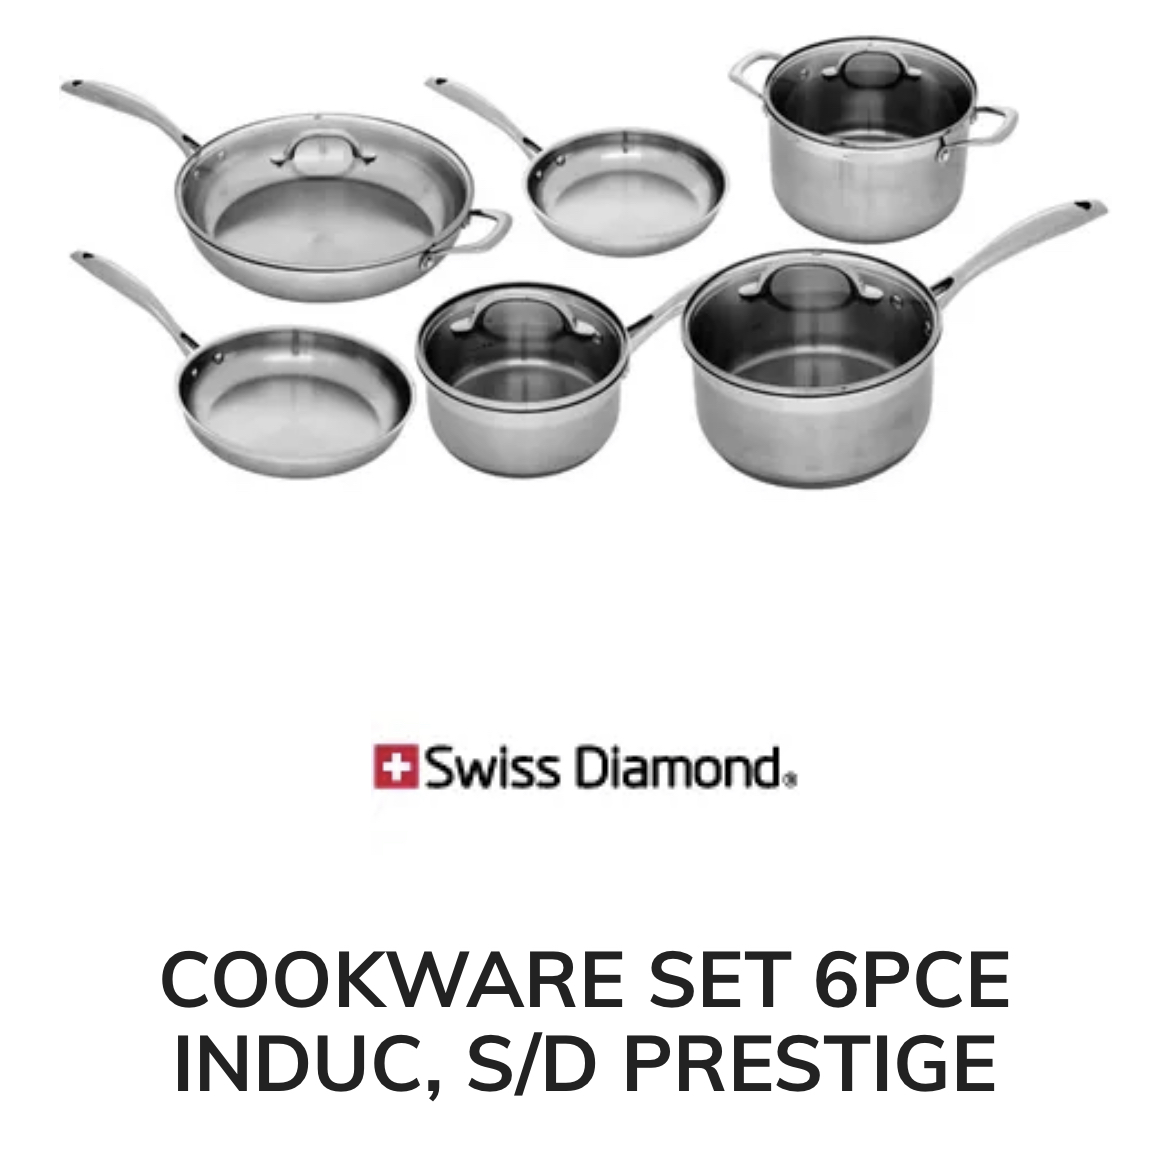 Cookware Set - Swiss Diamond 6PCE